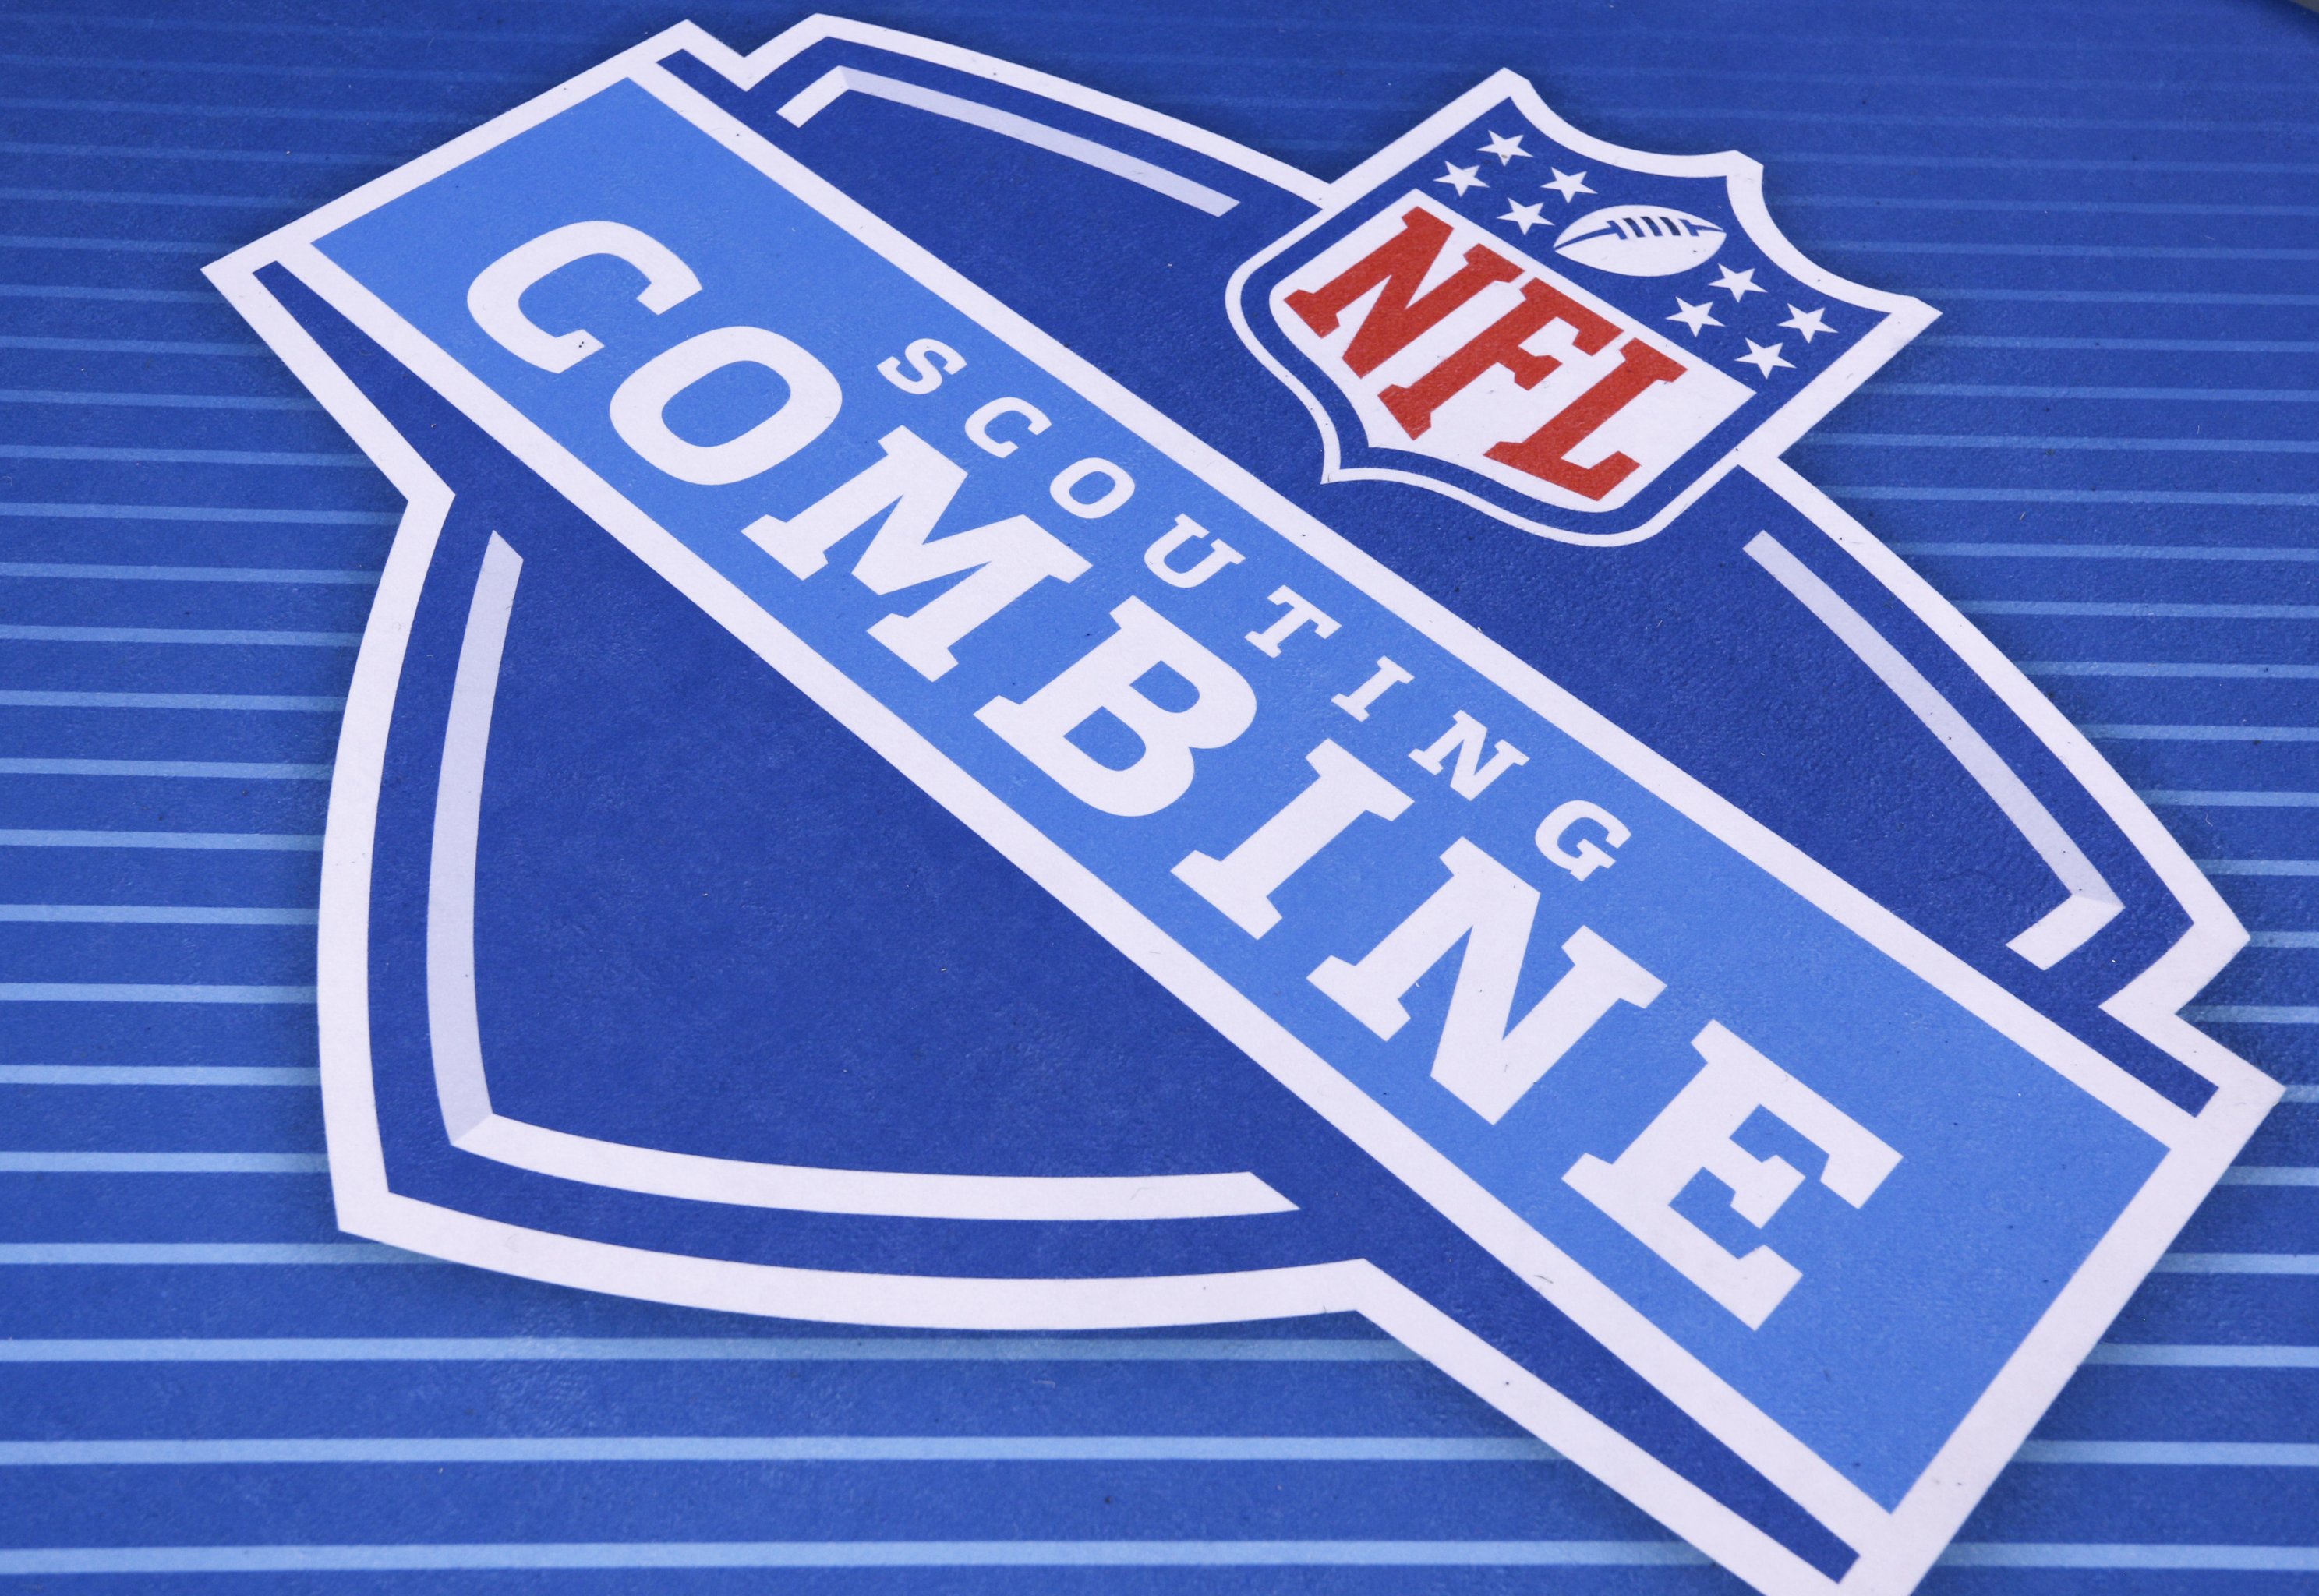 2018 NFL Draft prospect profile: Roquan Smith, LB, Georgia - Big Blue View